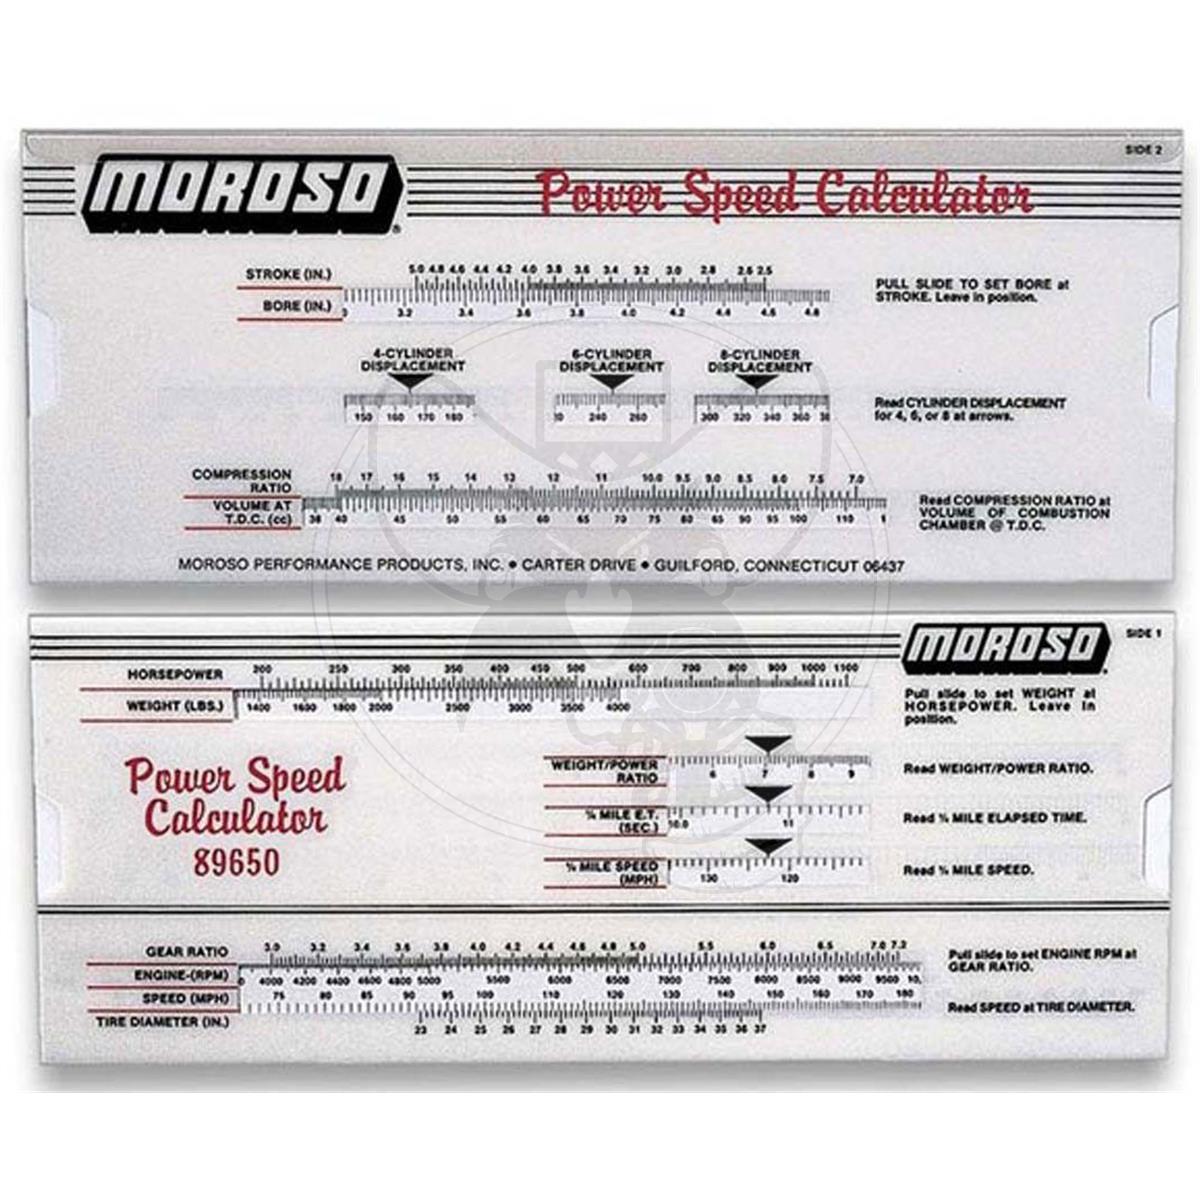 Moroso Technical Data Sheet 89650; Power Speed Calculator 